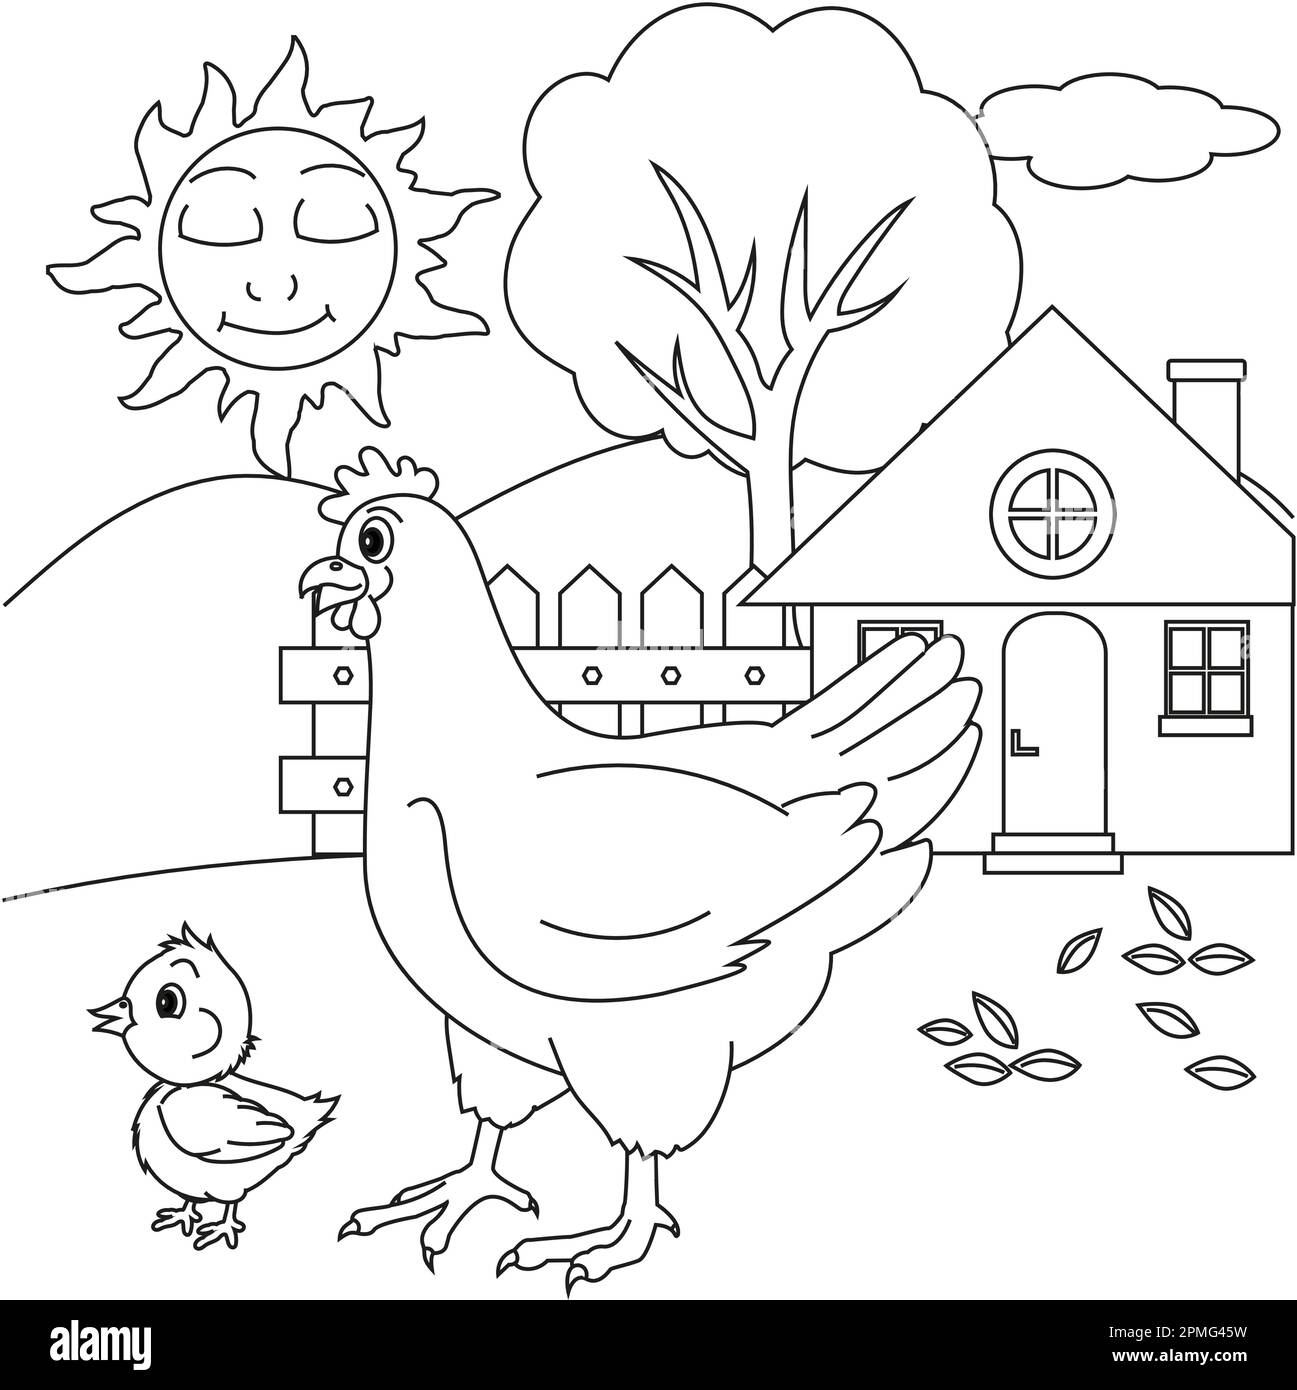 Hühnchen mit Baby-Hühnchen-Cartoon Stock Vektor